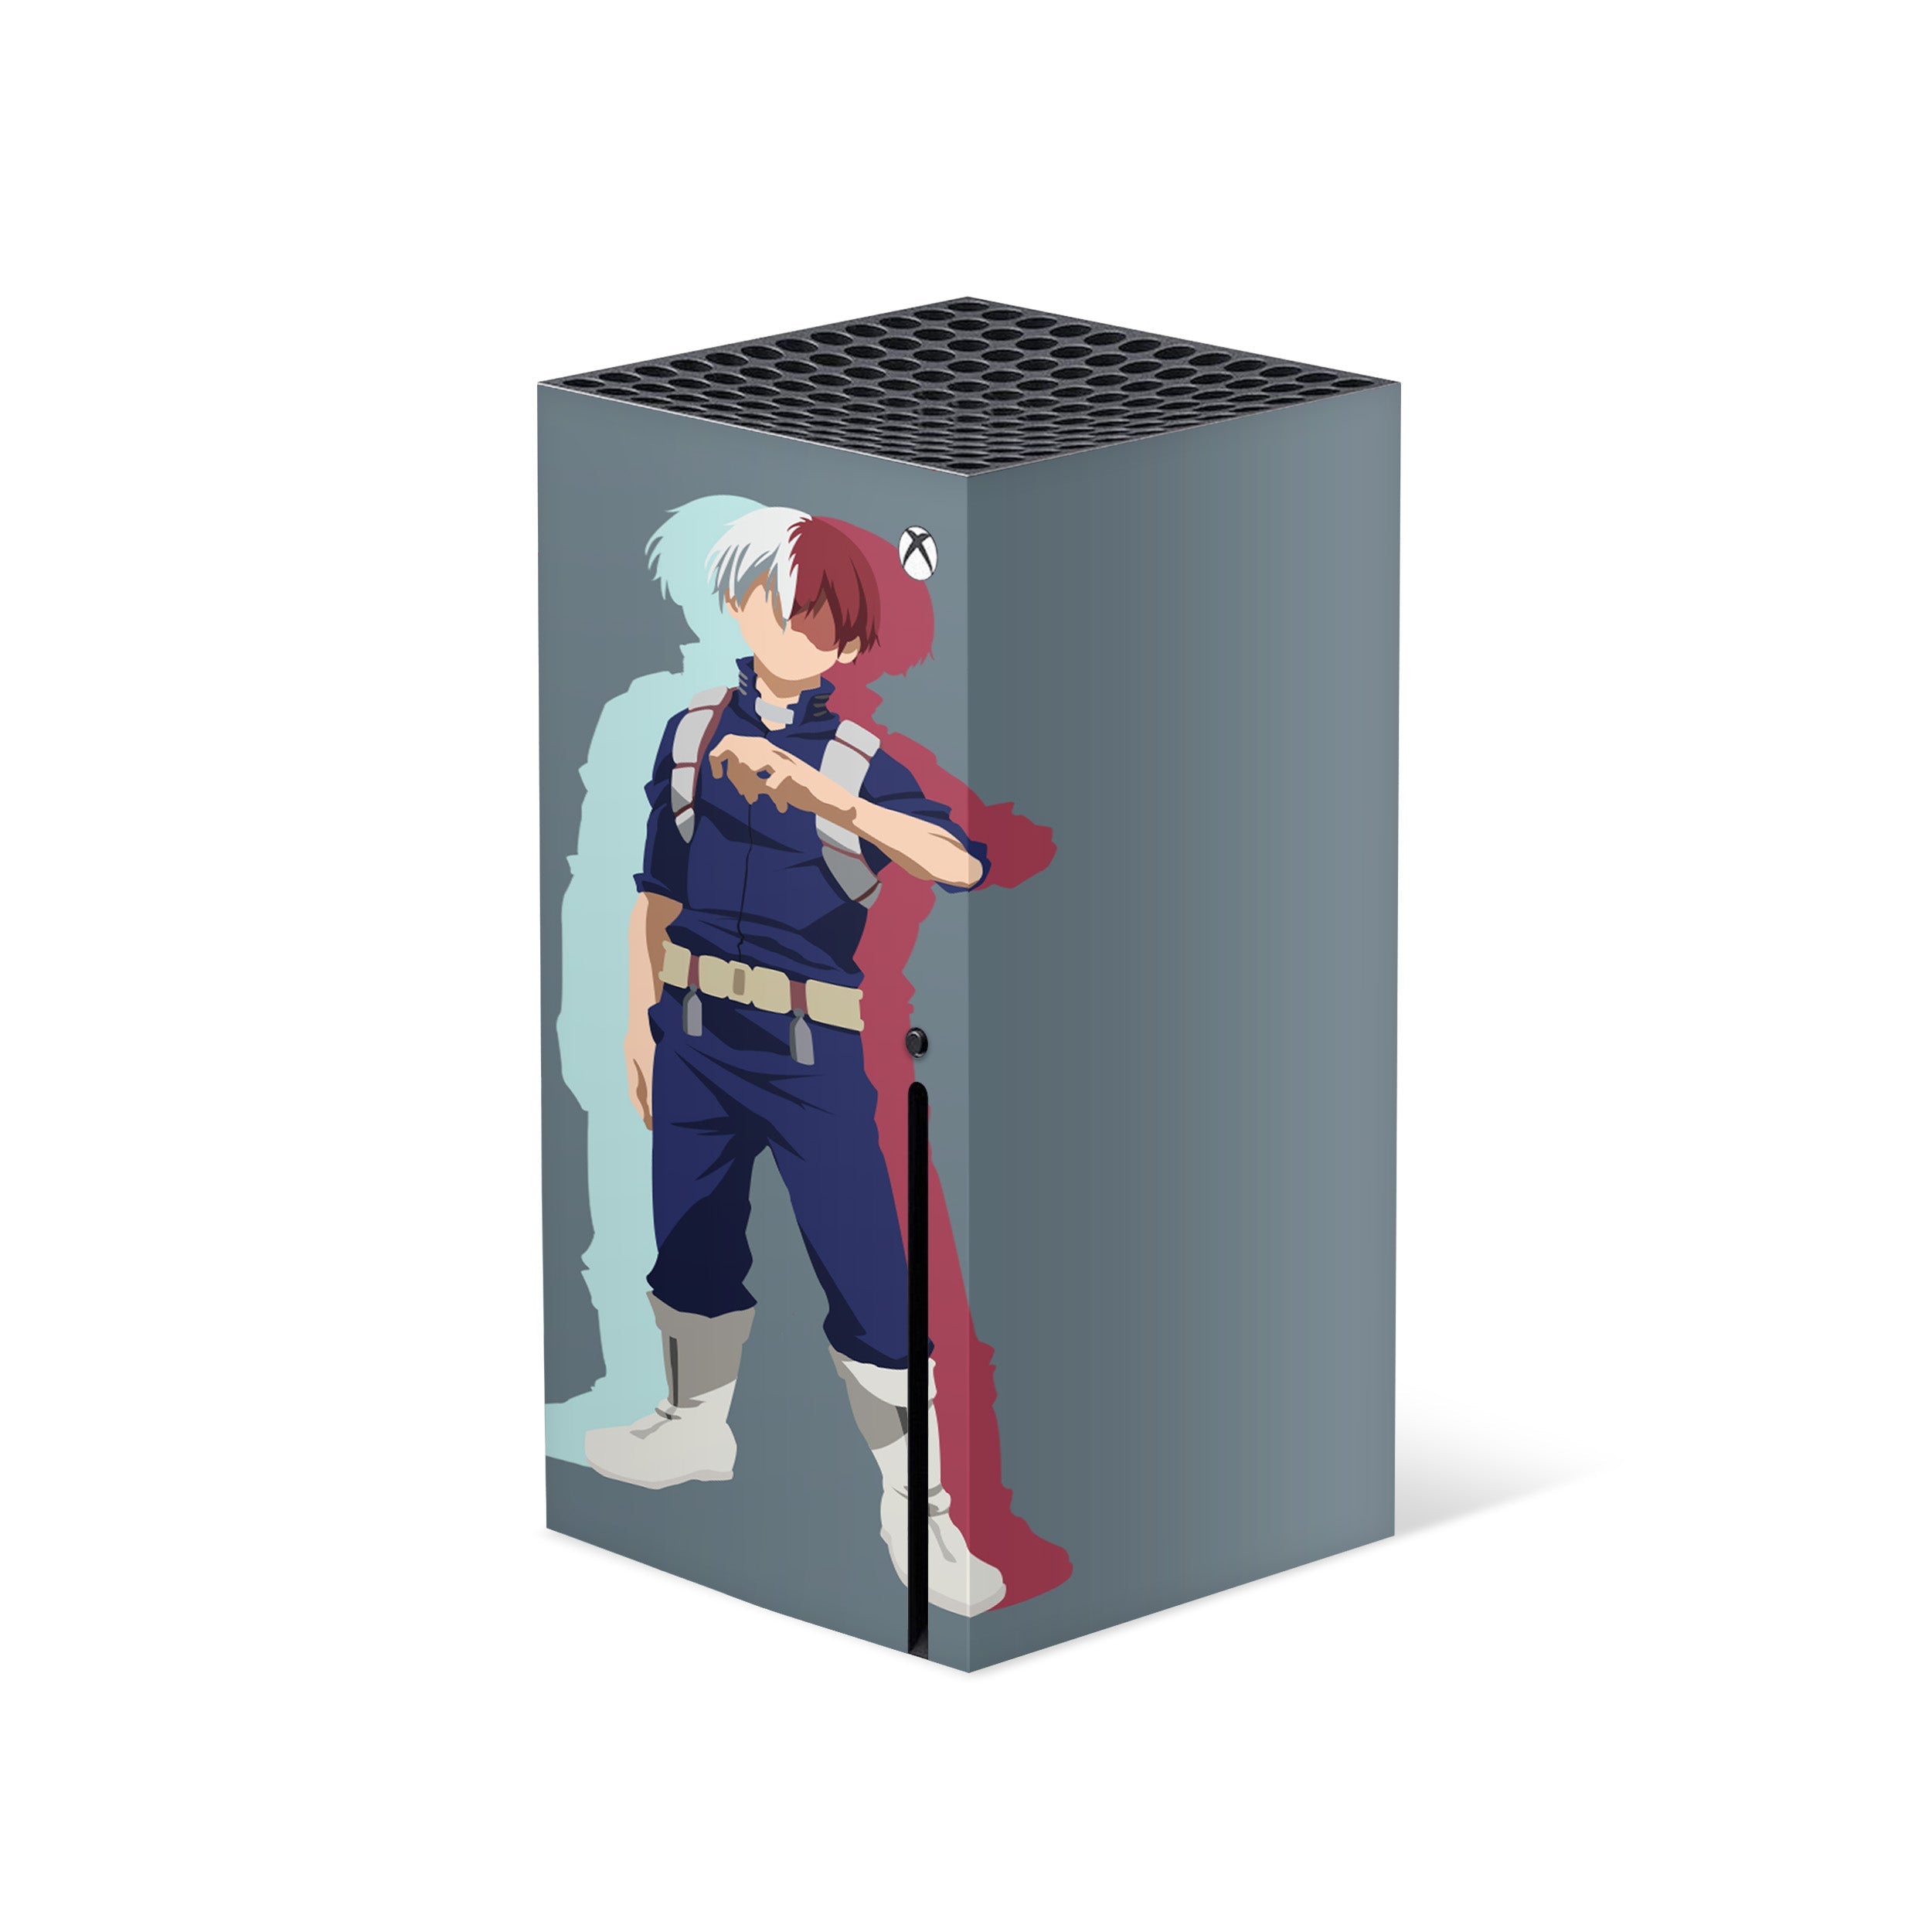 A video game skin featuring a My Hero Academia Shoto Todoroki design for the Xbox Series X.